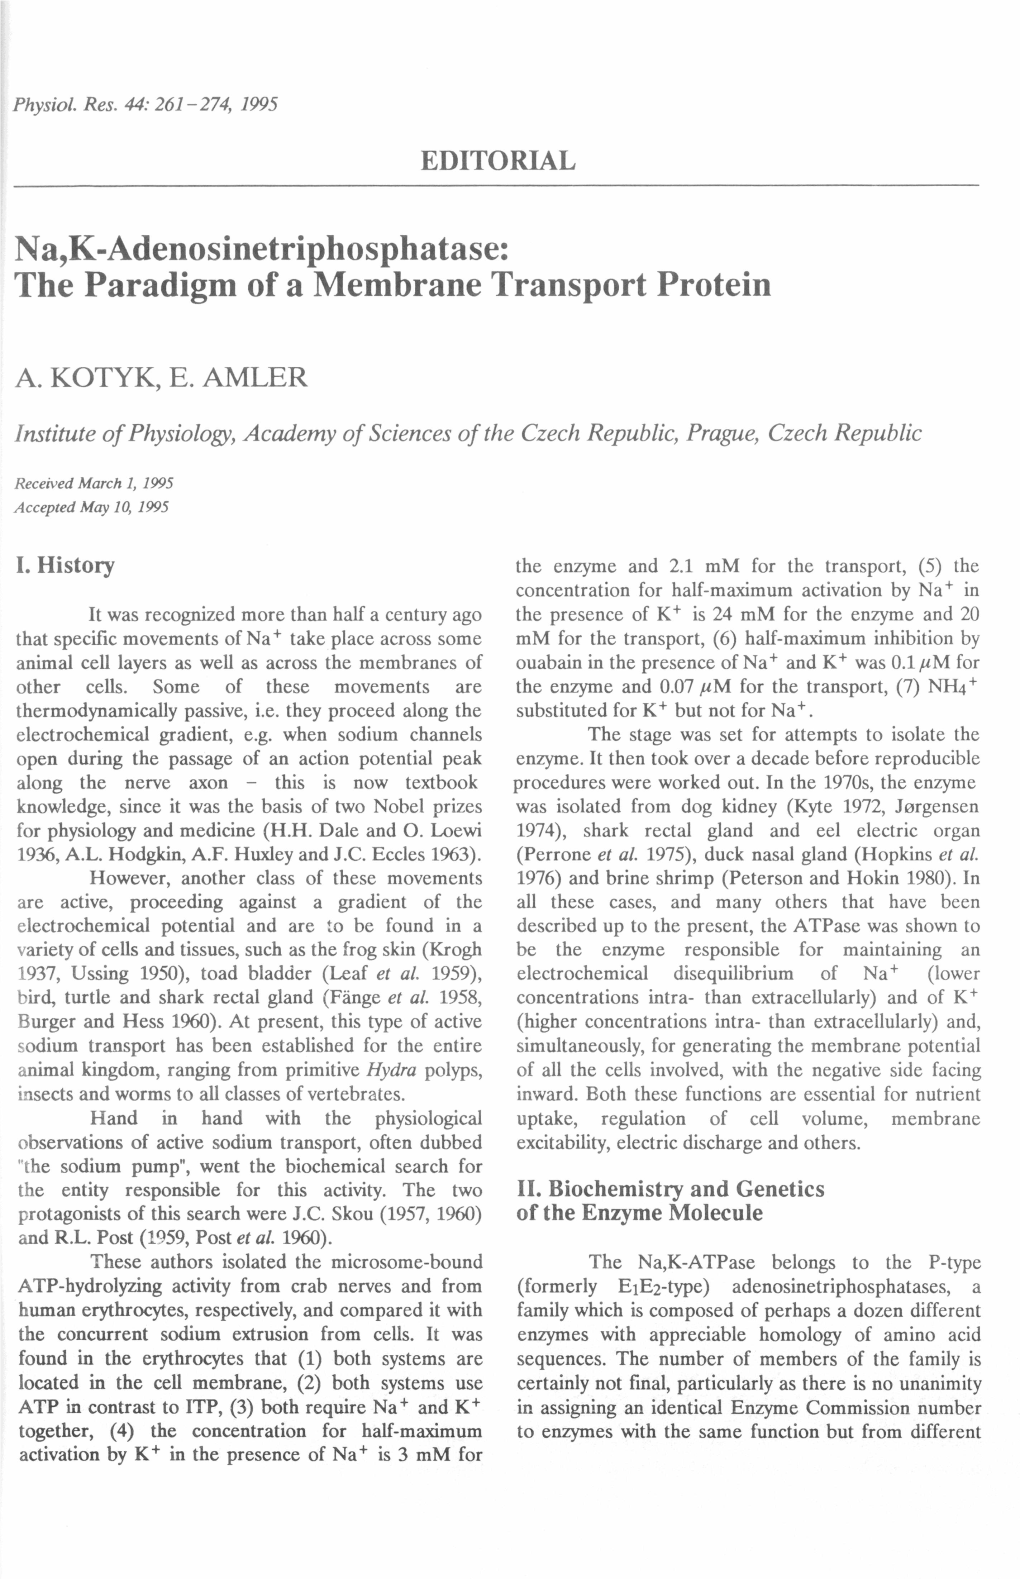 Na,K-Adenosinetriphosphatase: the Paradigm of a Membrane Transport Protein